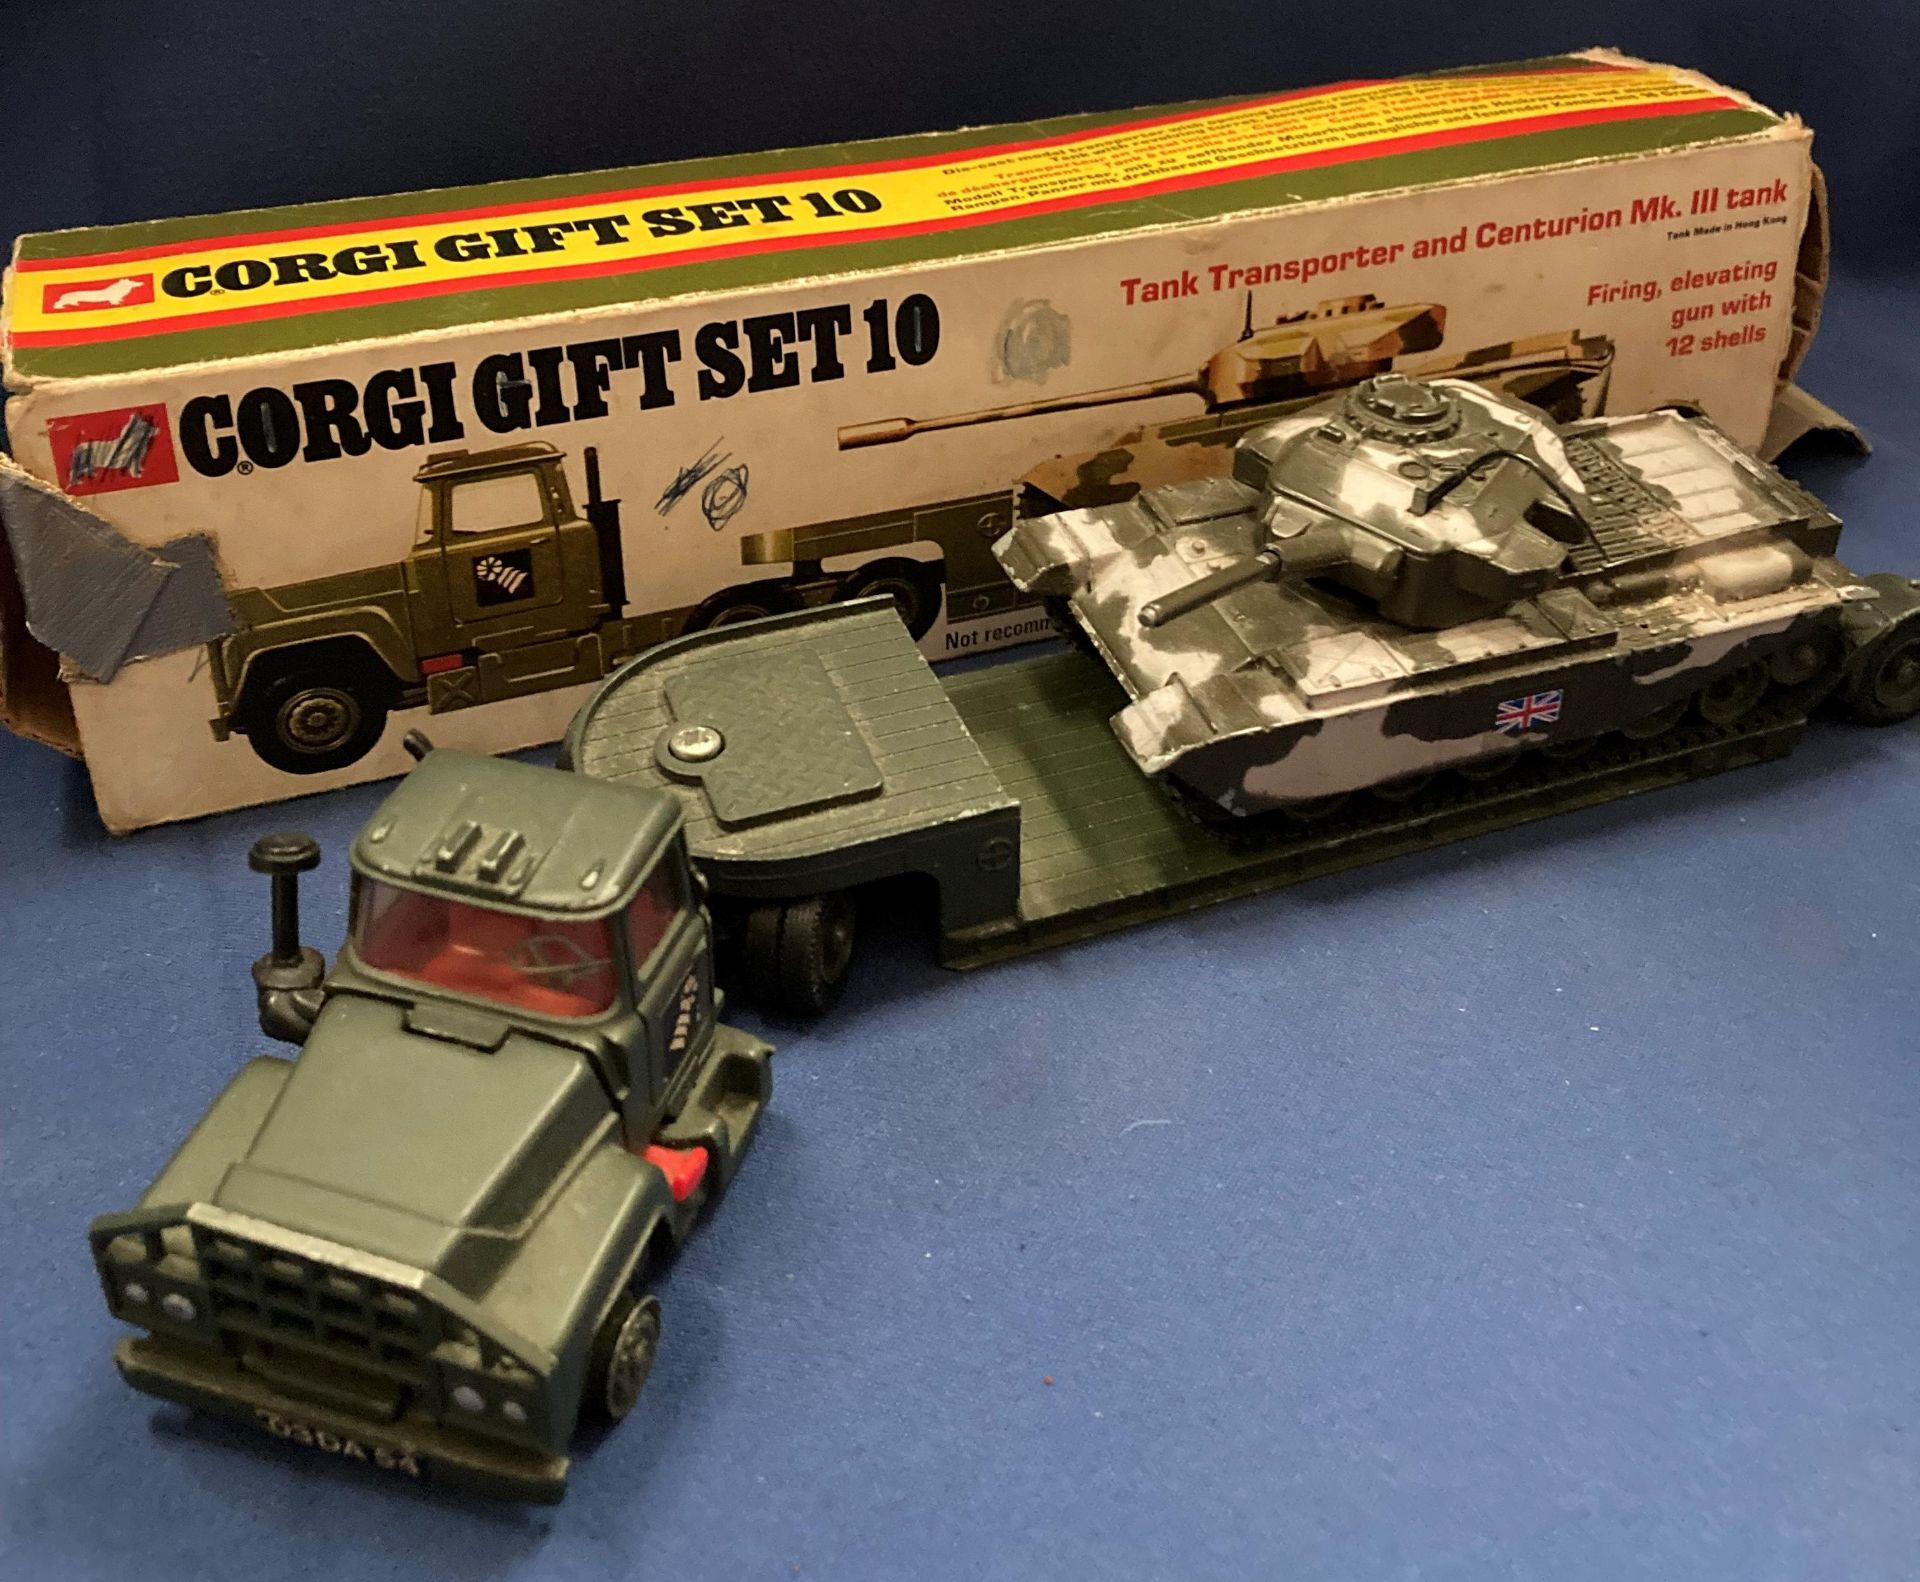 Corgi gift set 10 tank transporter and Centurion MKIII tank in box (box play worn) (S1 glass cab - Image 4 of 4